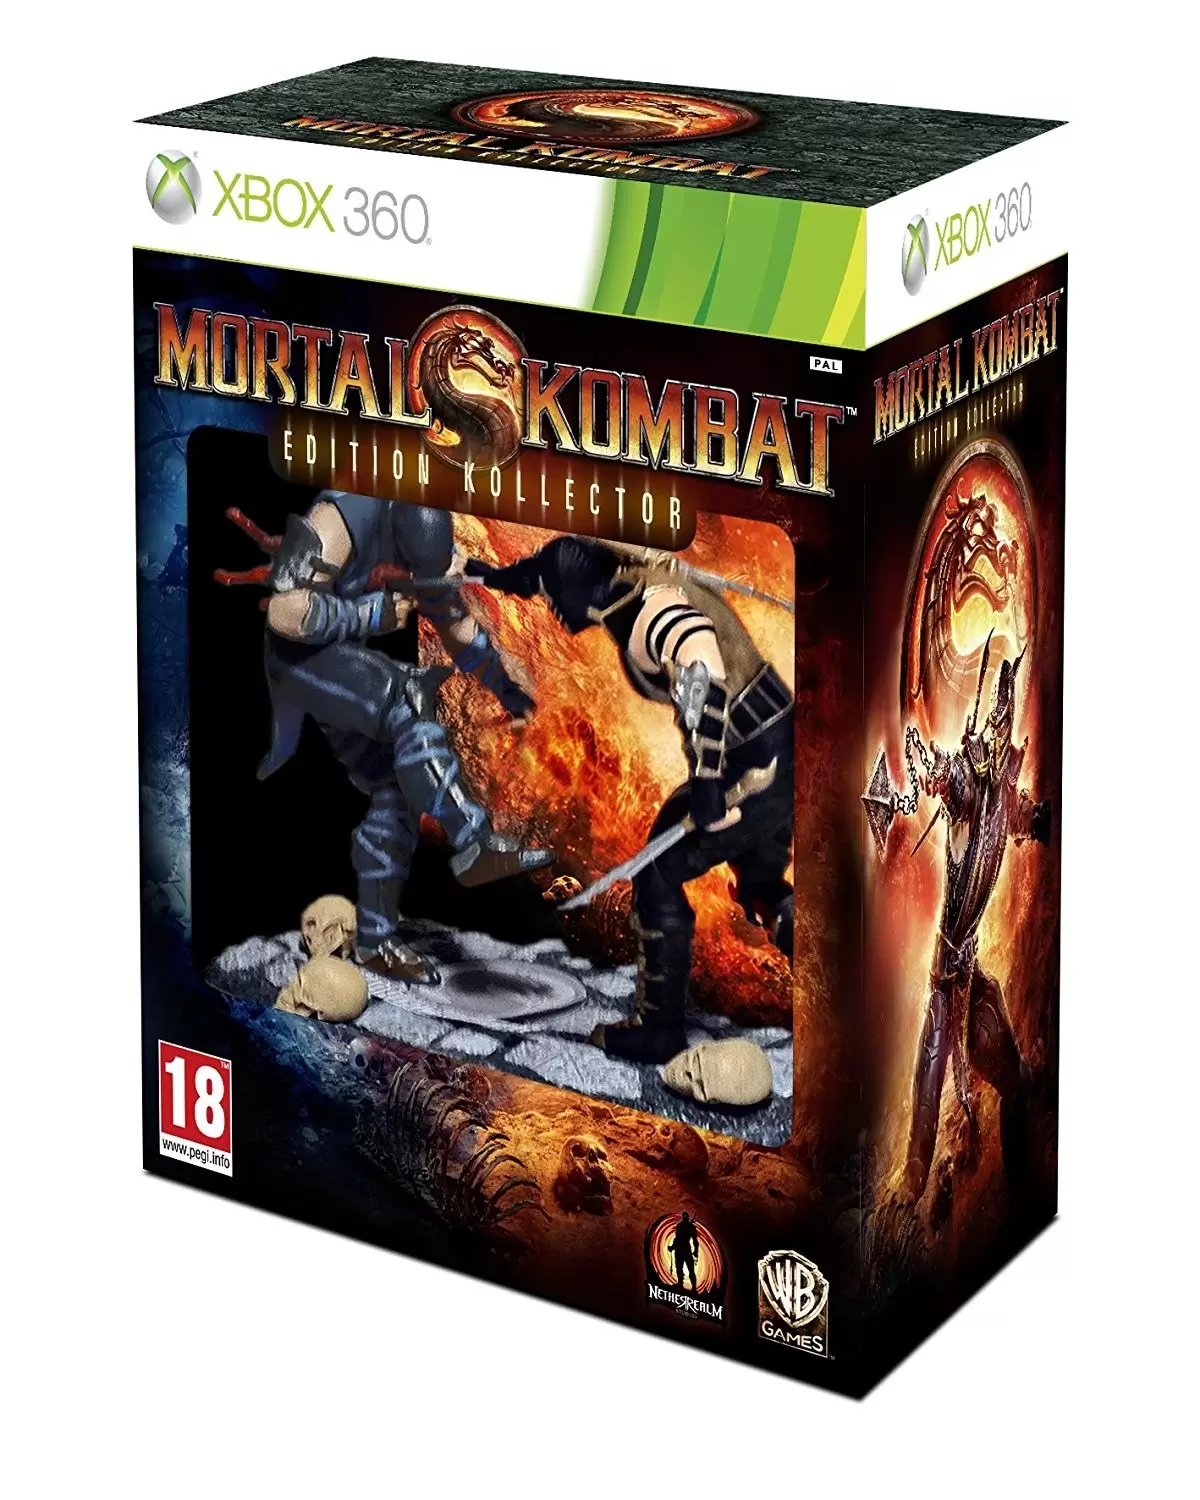 XBOX 360 Games - Mortal Kombat : Edition Kollector